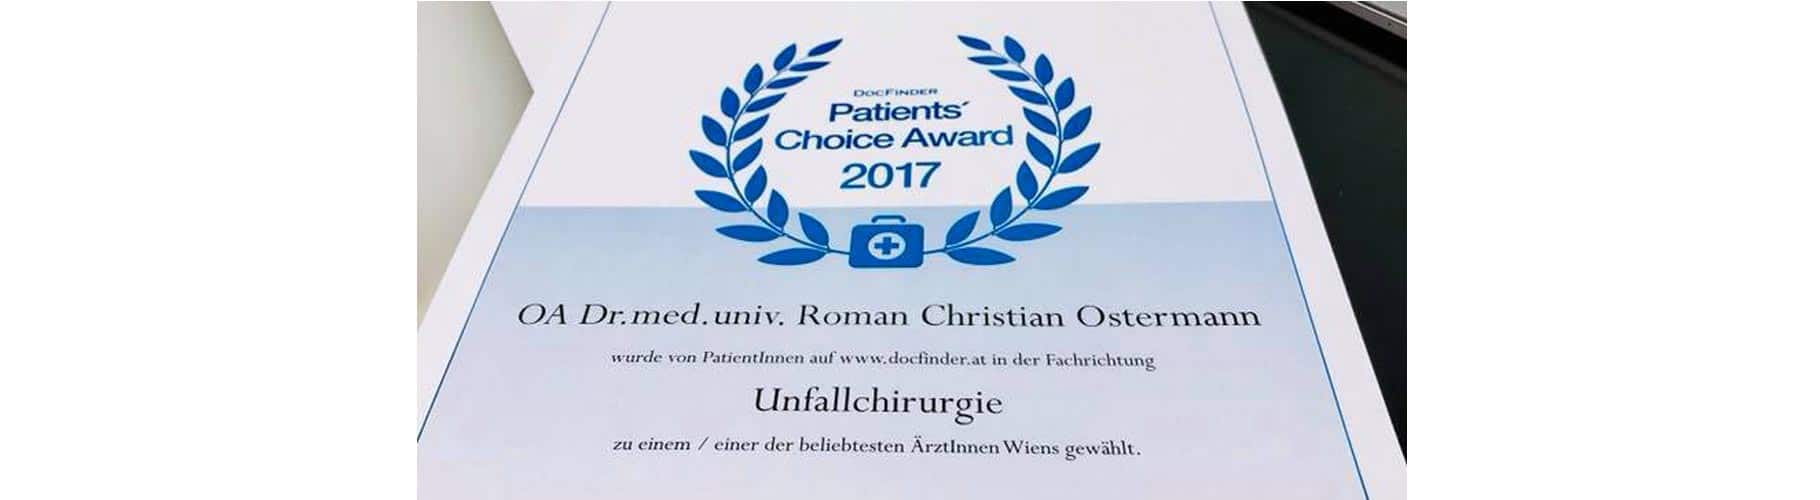 diplom patients award